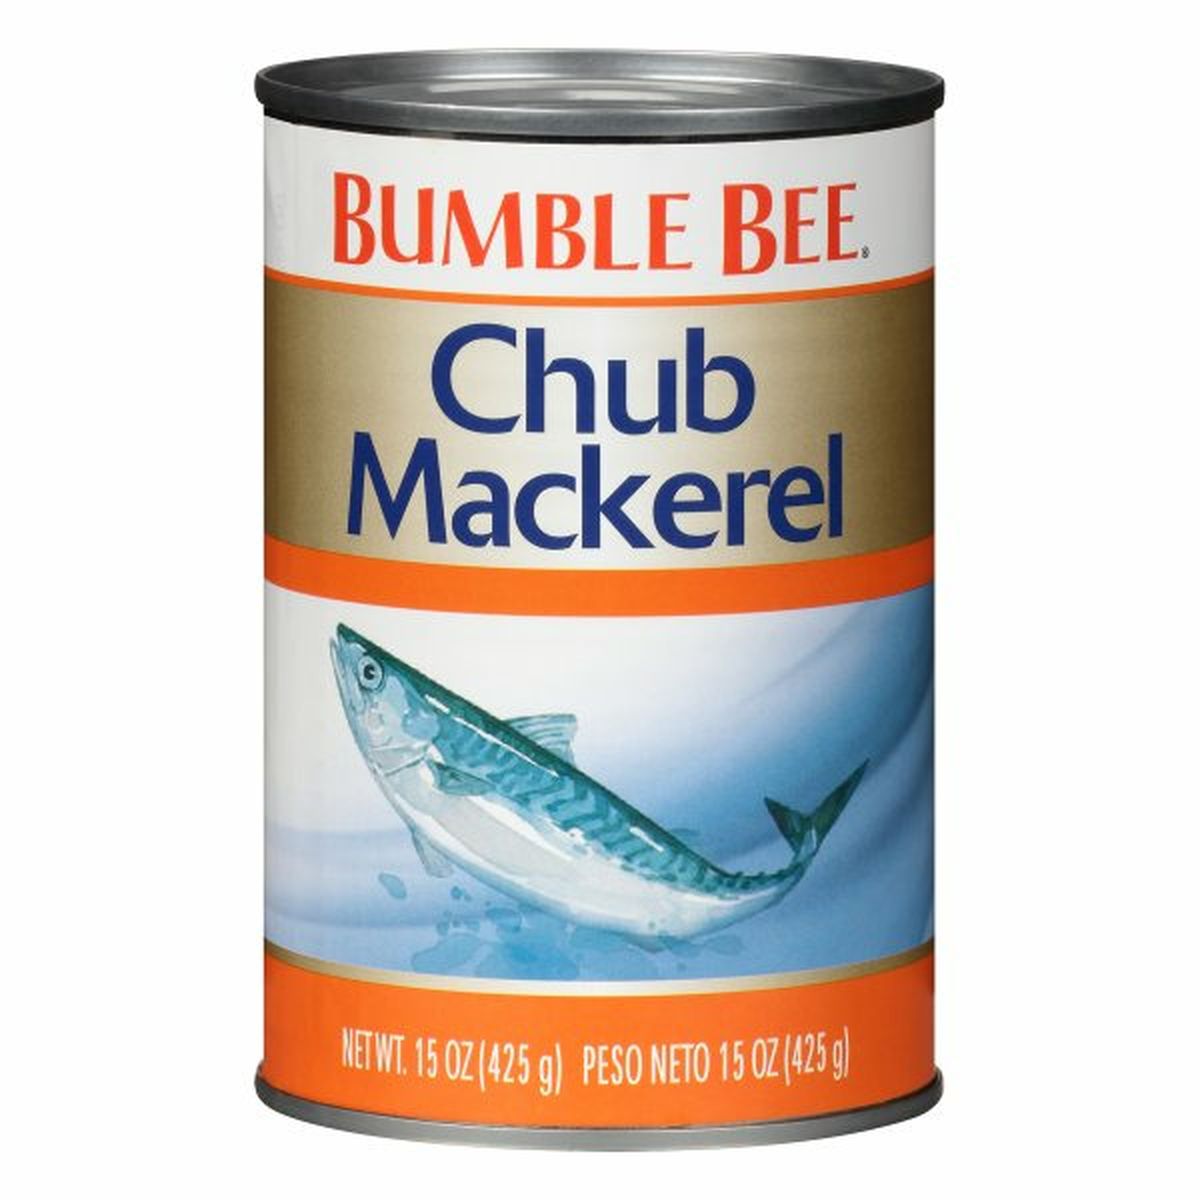 Calories in Bumble Bee Chub Mackerel